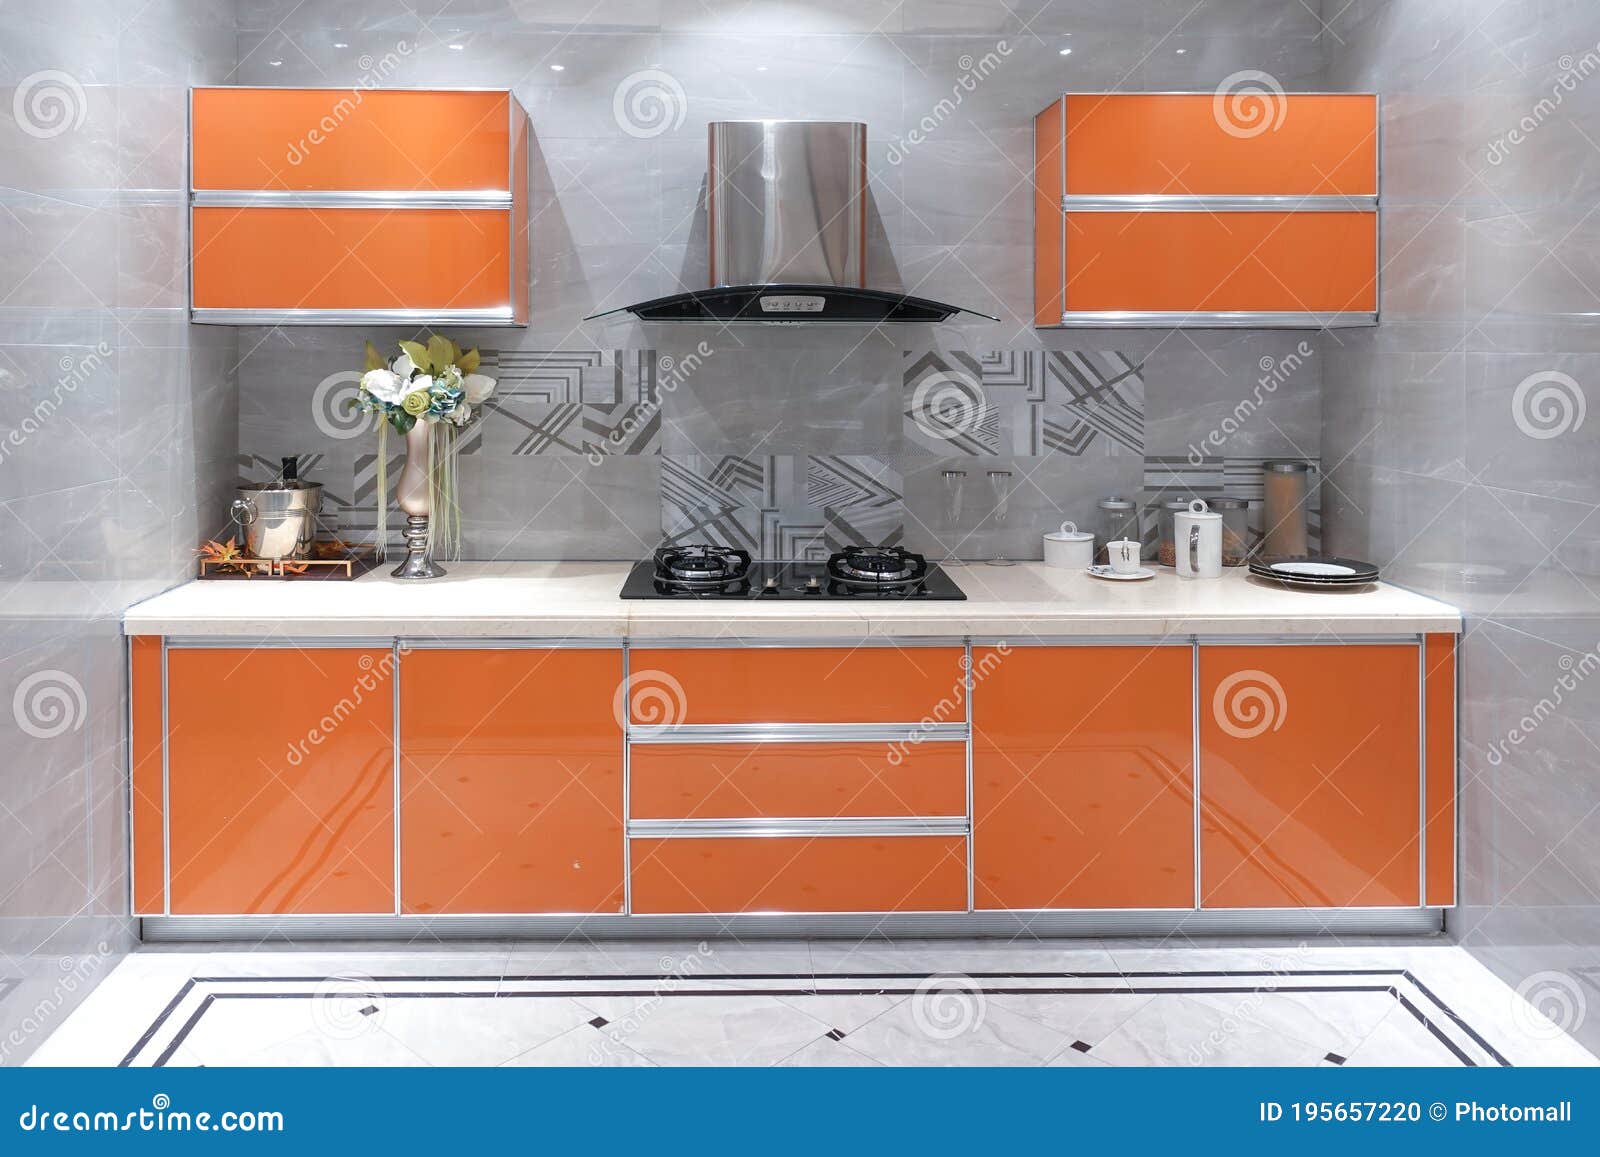 https://thumbs.dreamstime.com/z/modern-luxury-kitchen-orange-cabinets-kitchen%EF%BC%8Corange-cabinets%EF%BC%8Cstainless-steel-range-hood%EF%BC%8Cignition-stove%EF%BC%8Cstone-tile-floor-195657220.jpg